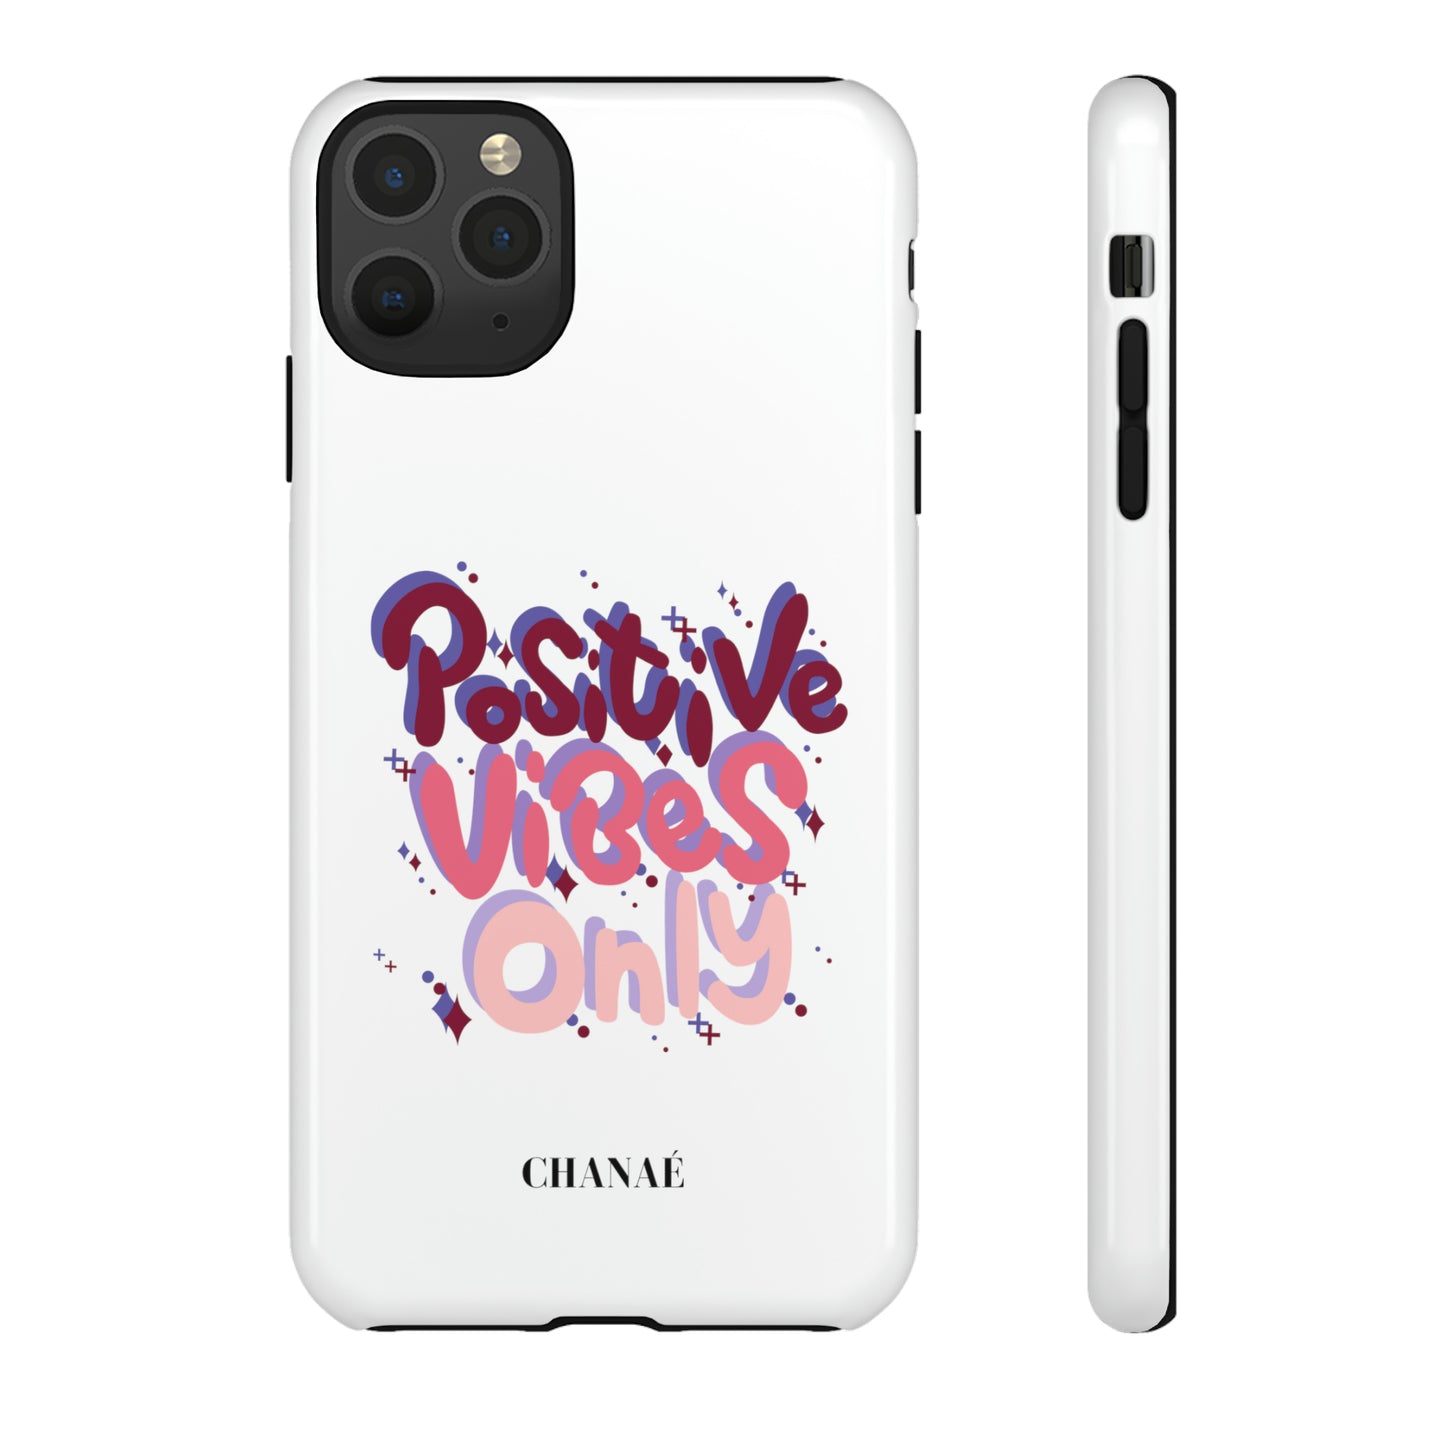 Positive Vibes iPhone "Tough" Case (White)